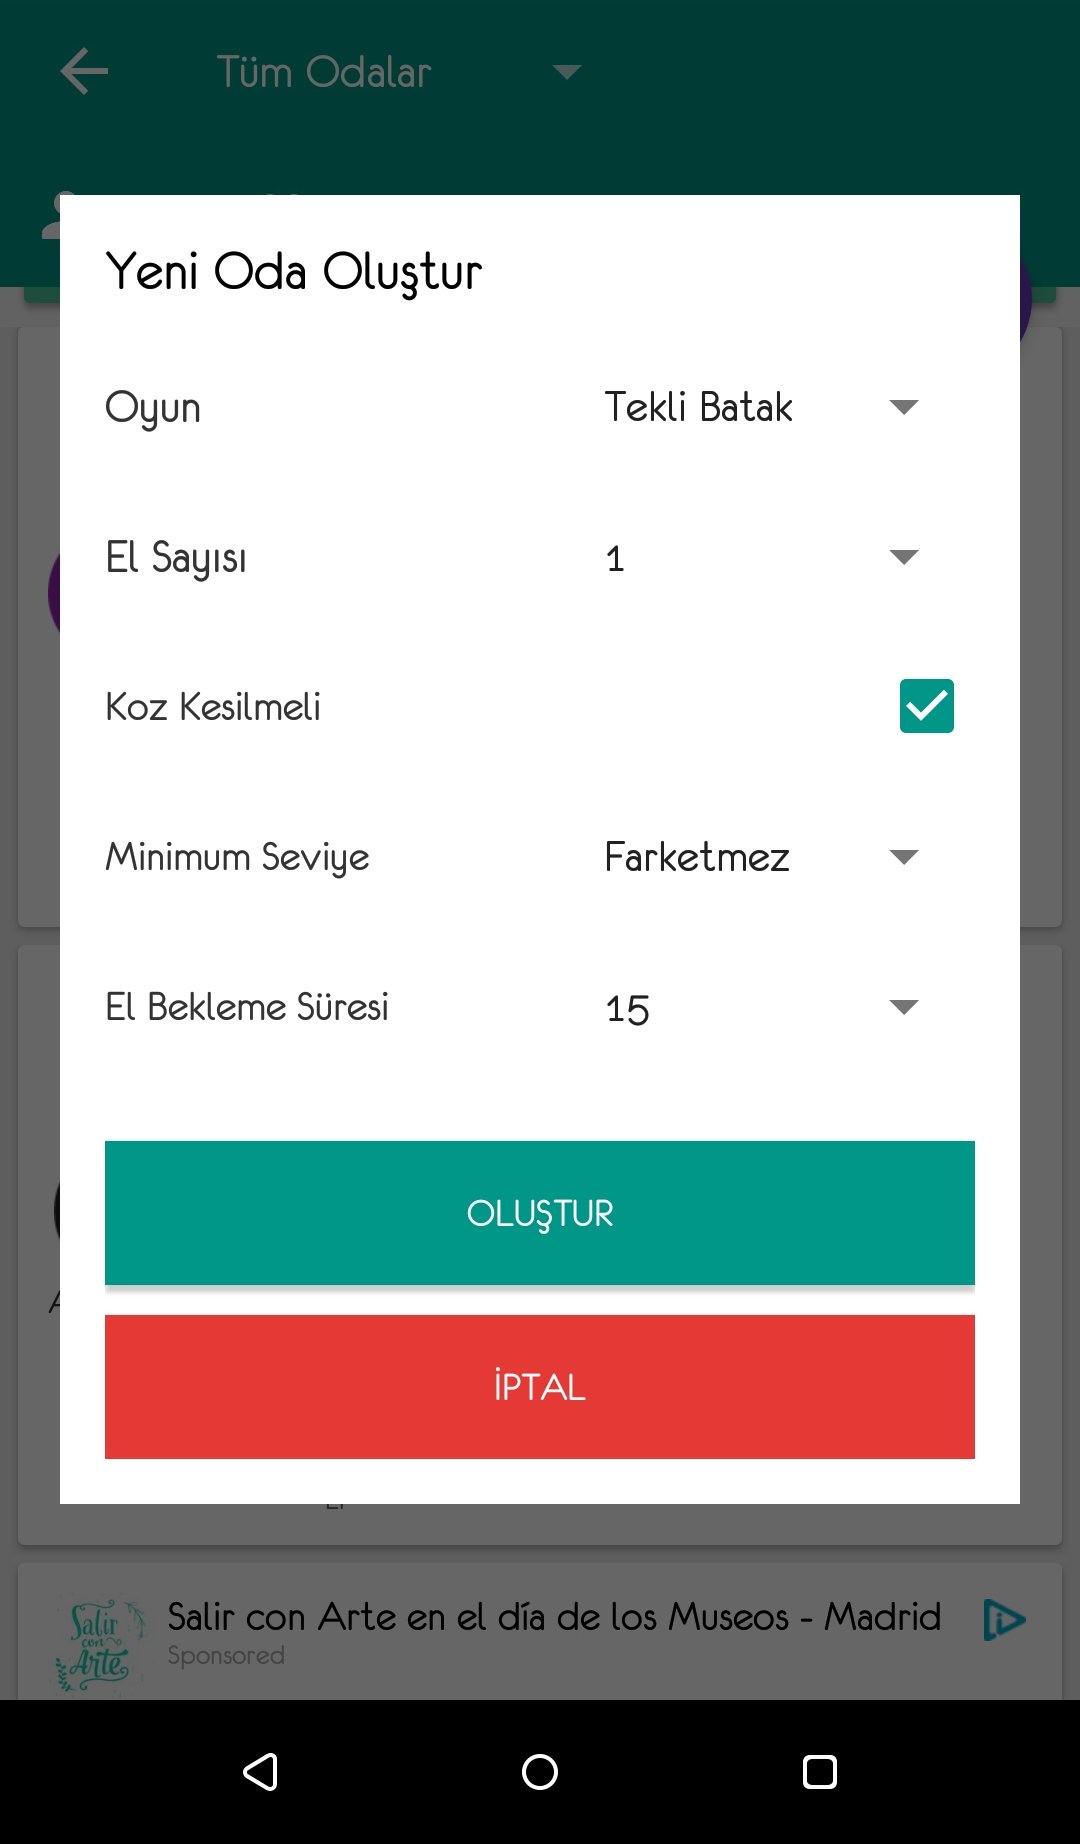 Batak Online - Apps on Google Play